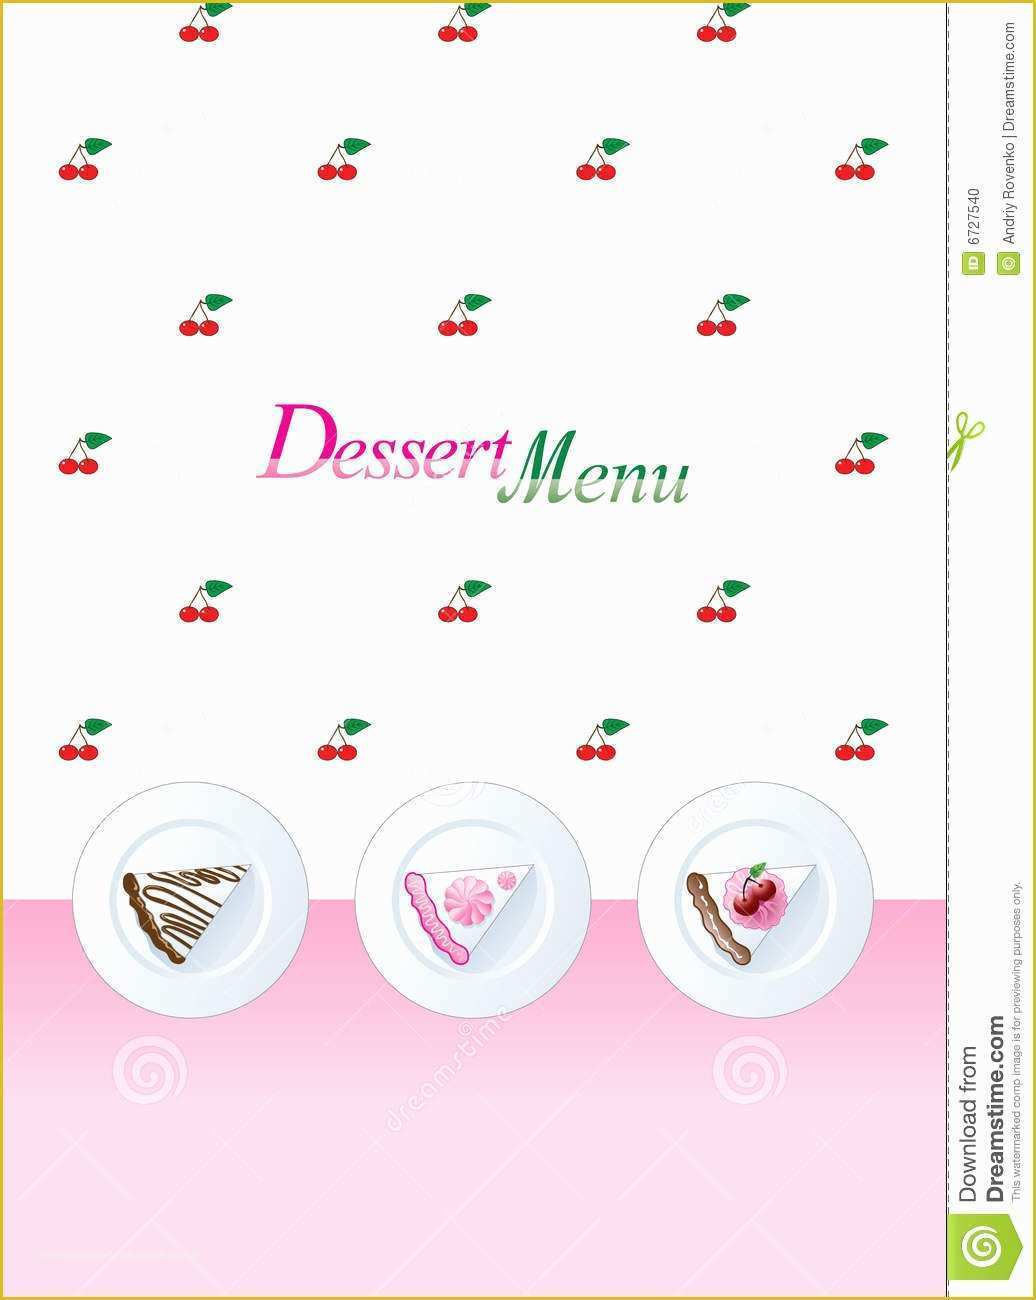 Dessert Menu Template Free Download Of Dessert Menu Template Stock Image